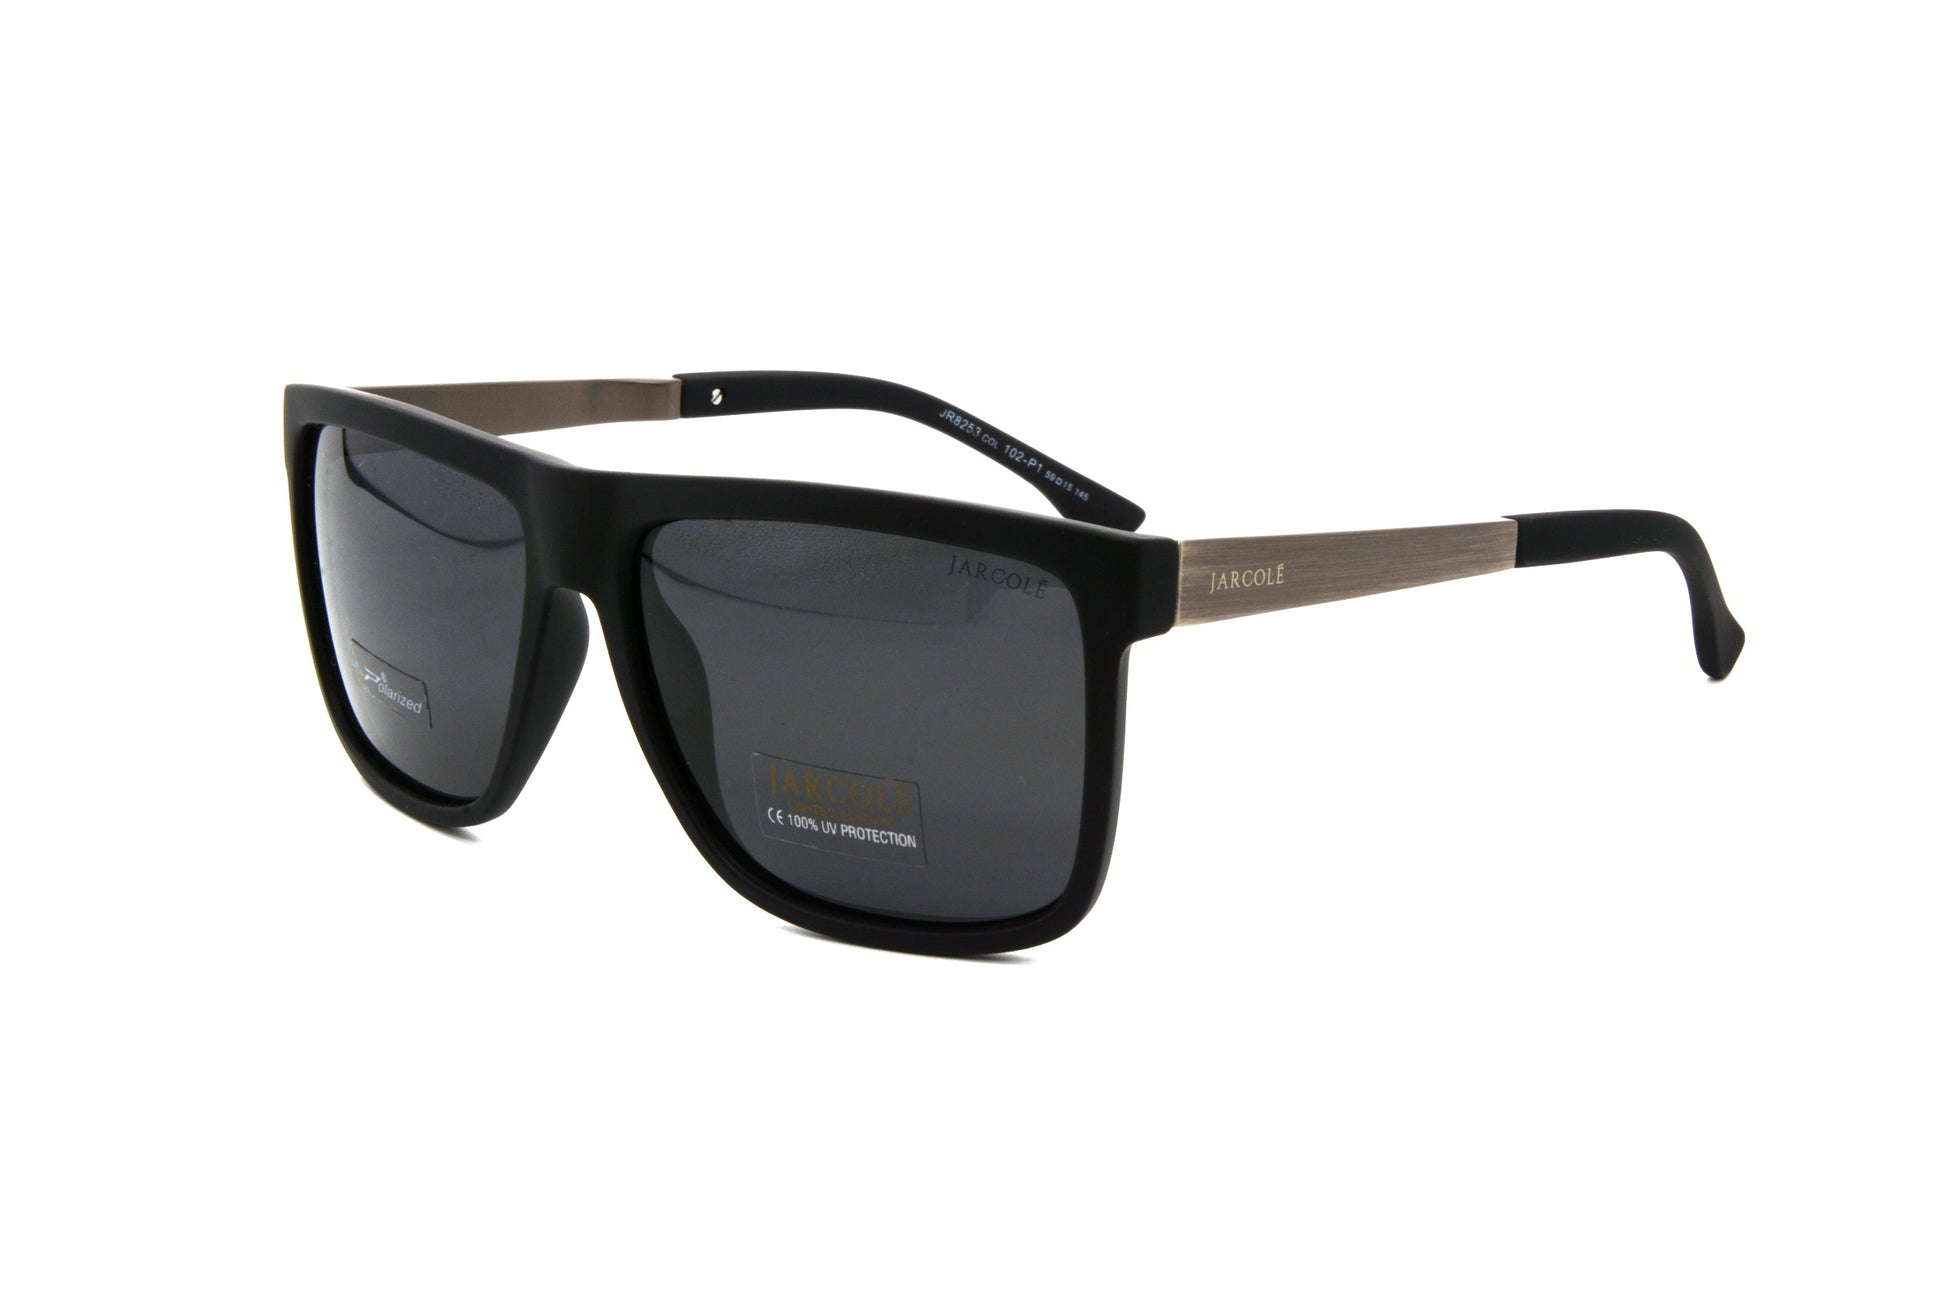 Jarcole sunglasses 8253 102-P1